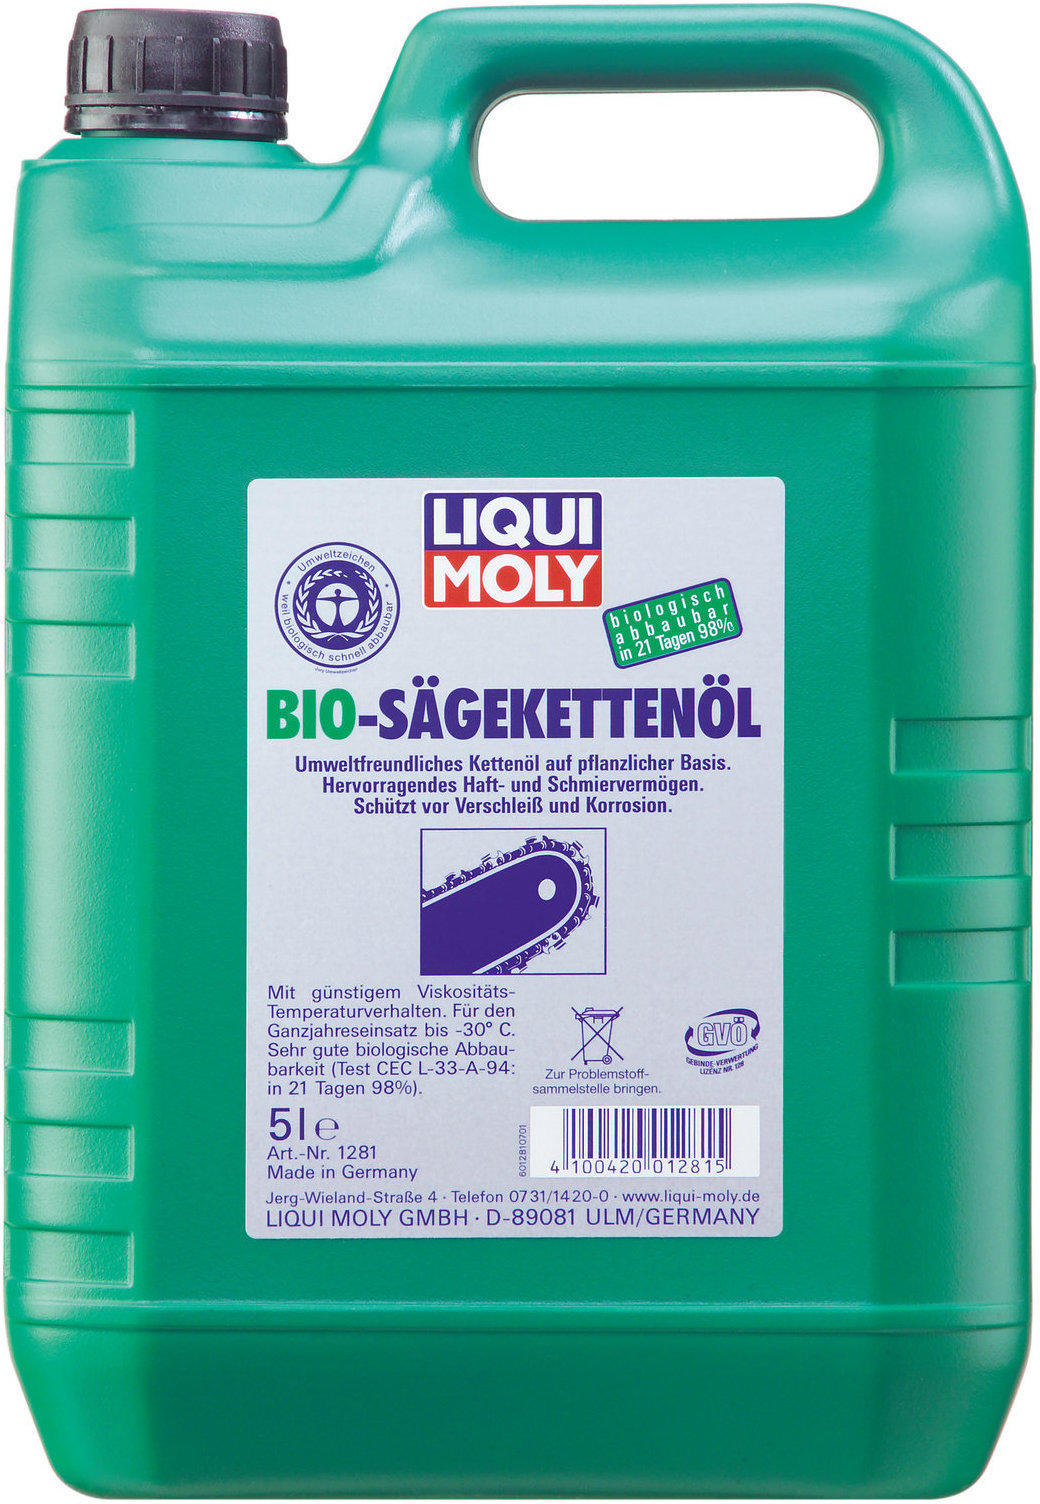 LIQUI MOLY Bio-Sägekettenöl 5 Liter Test Black Friday Deals TOP